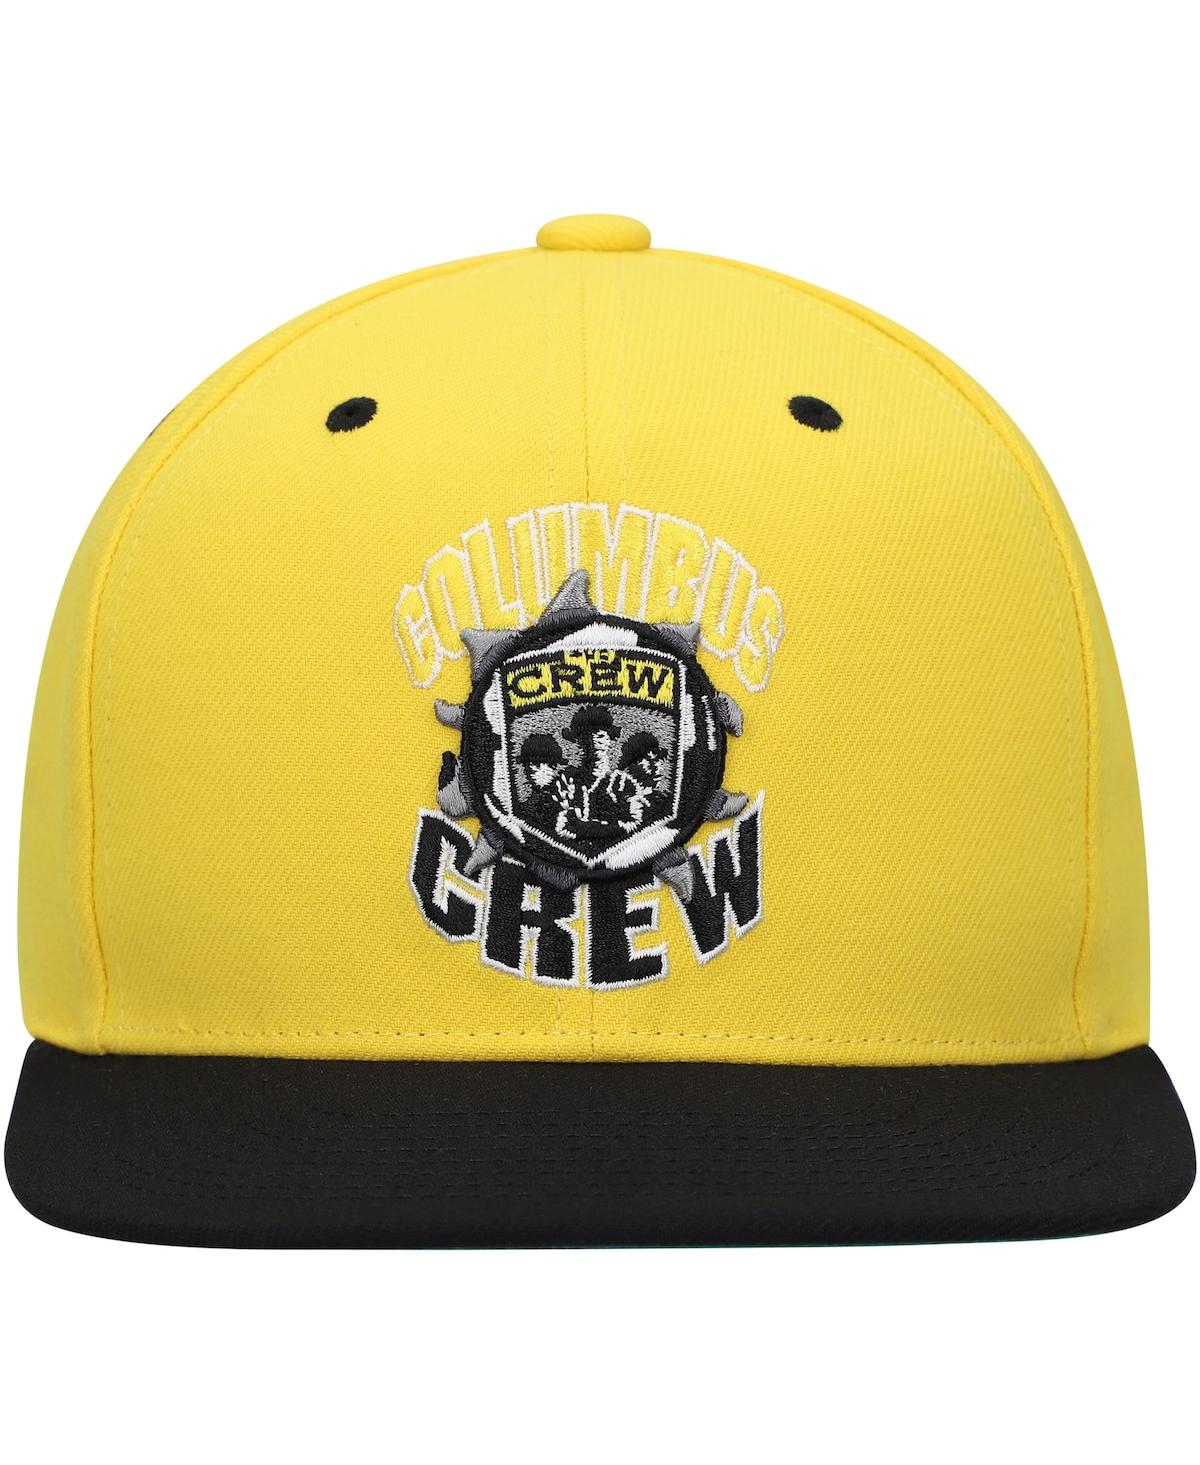 Shop Mitchell & Ness Men's  Gold Columbus Crew Breakthrough Snapback Hat